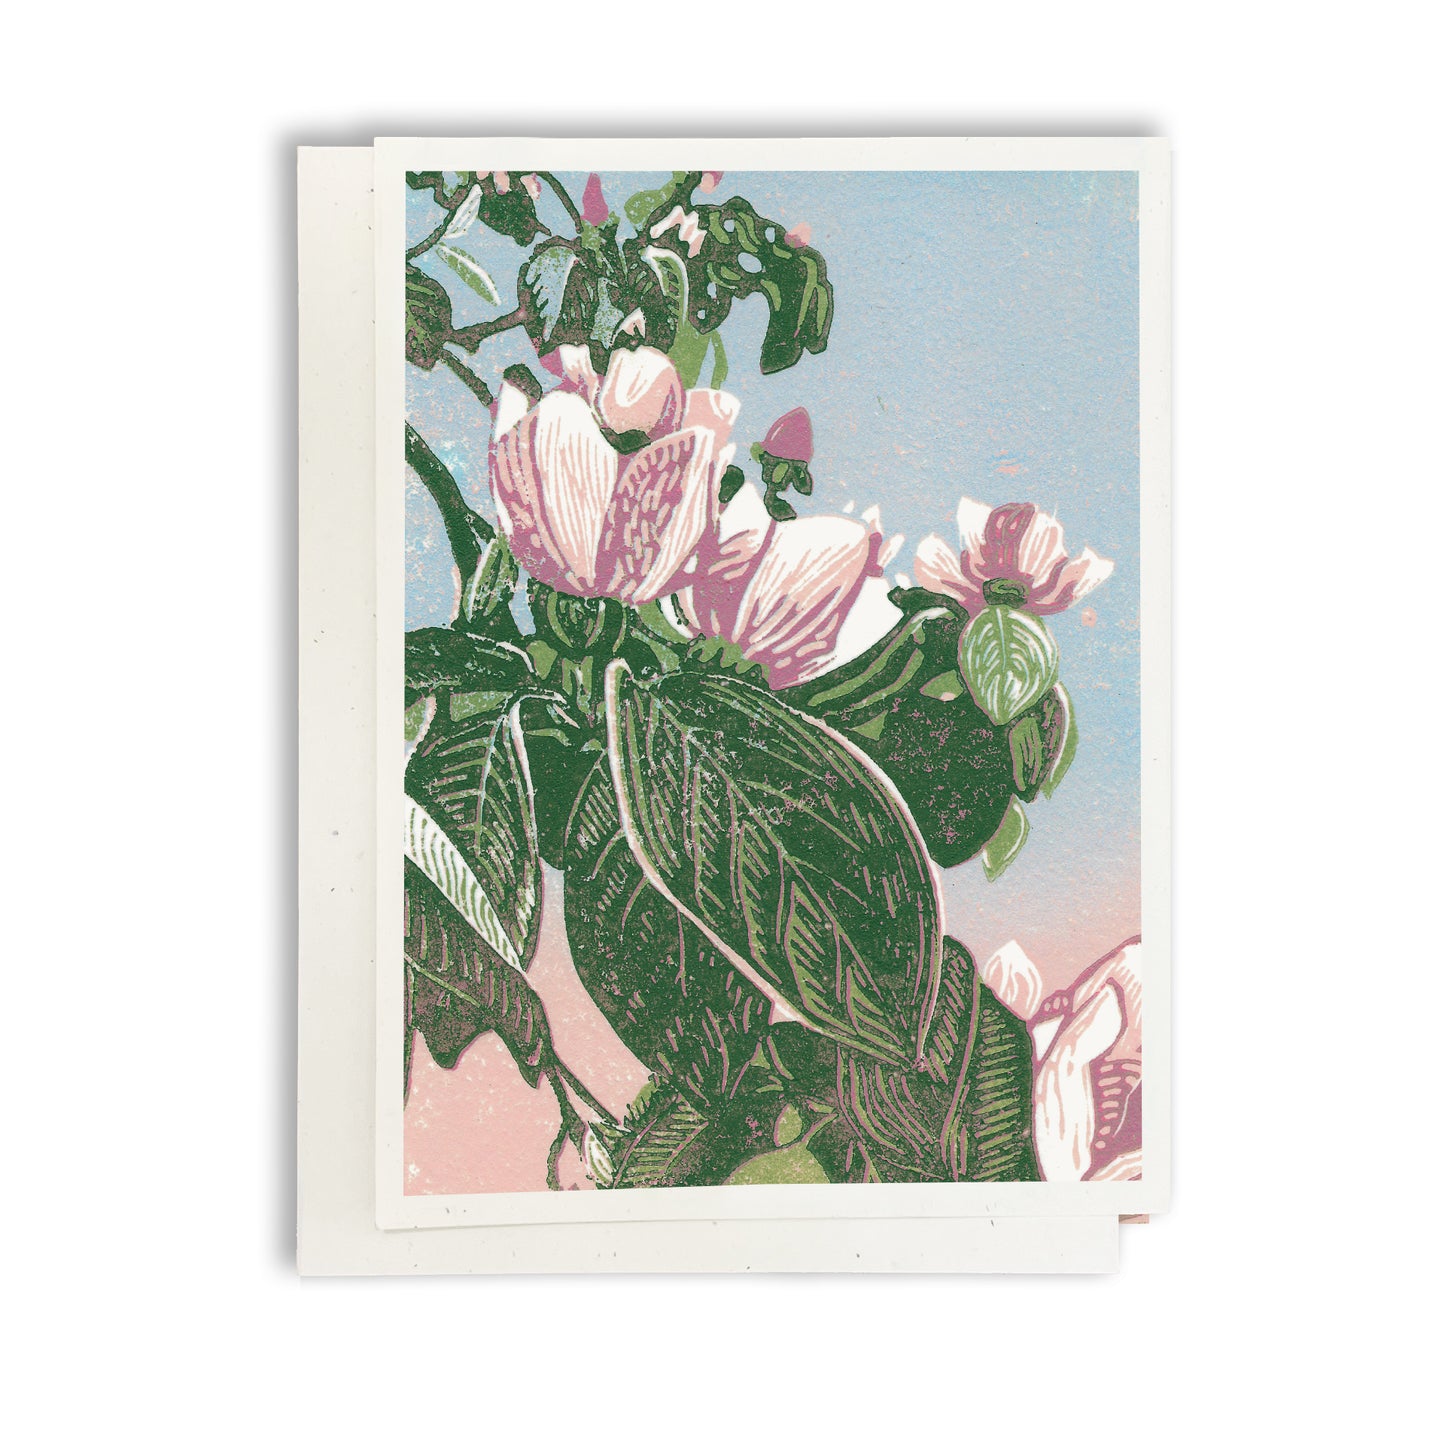 A casually elegant card featuring floral art by Natalia Wohletz titled En el Jardin.